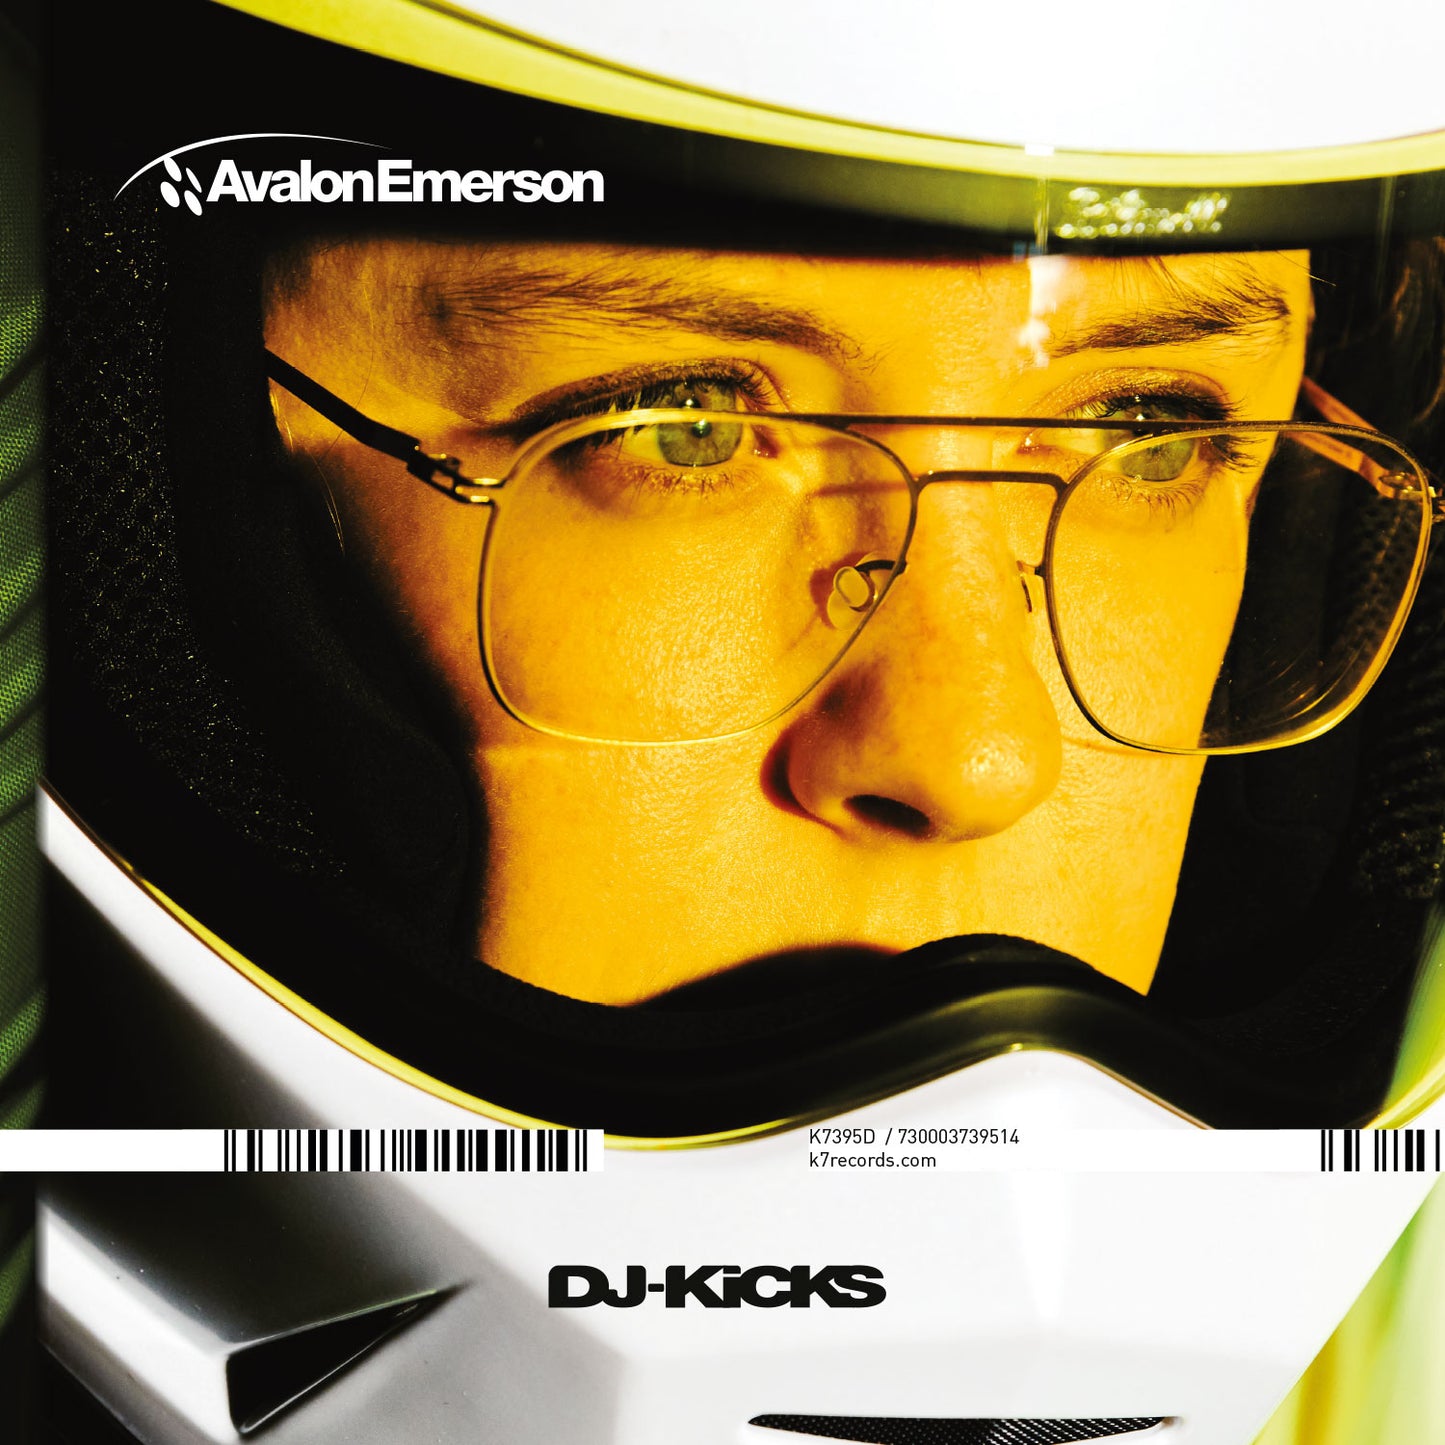 DJ-Kicks - Avalon Emerson [K7]